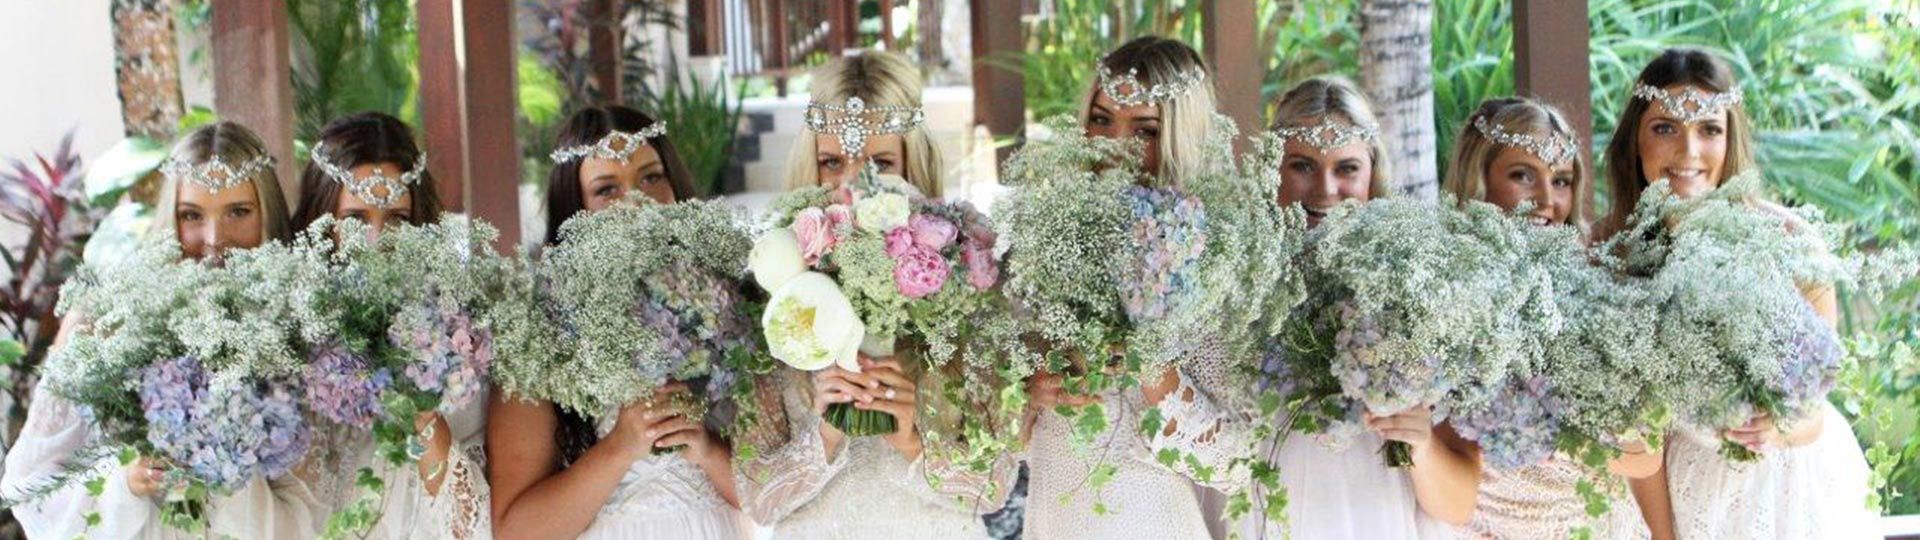 Nashira & Kevin's Vibrant Bali Wedding